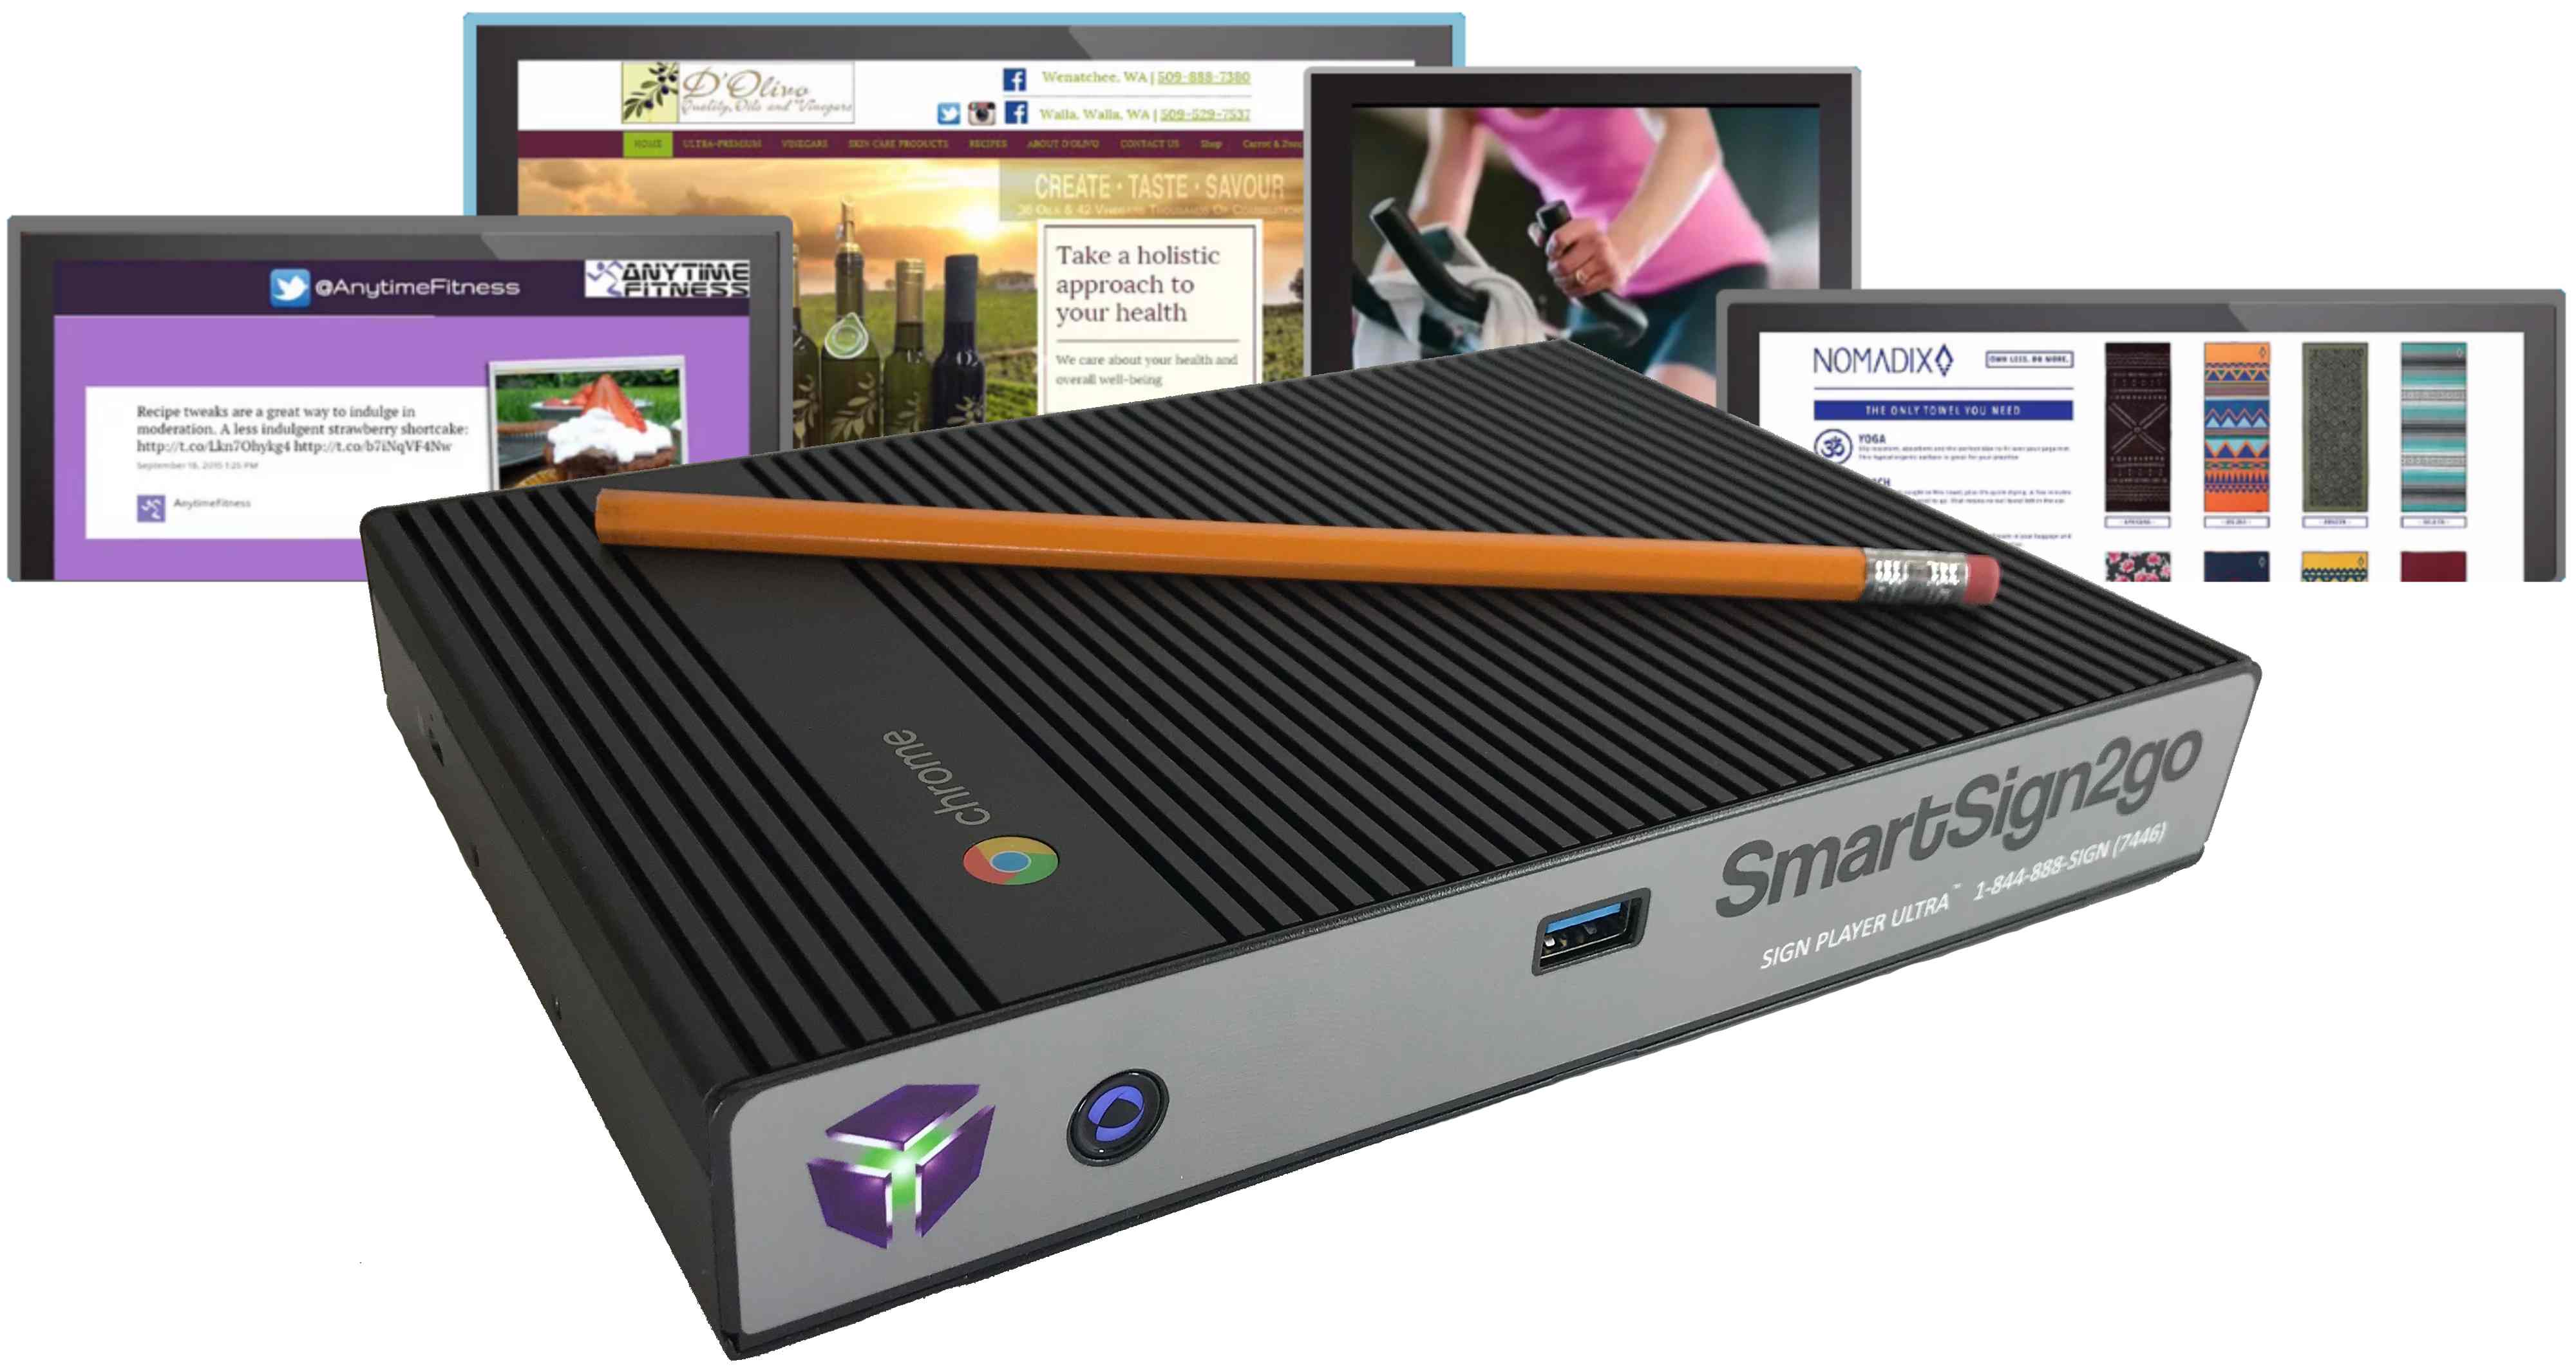 Smart Digital Signage Player UltraHD with Design - SmartSign2go